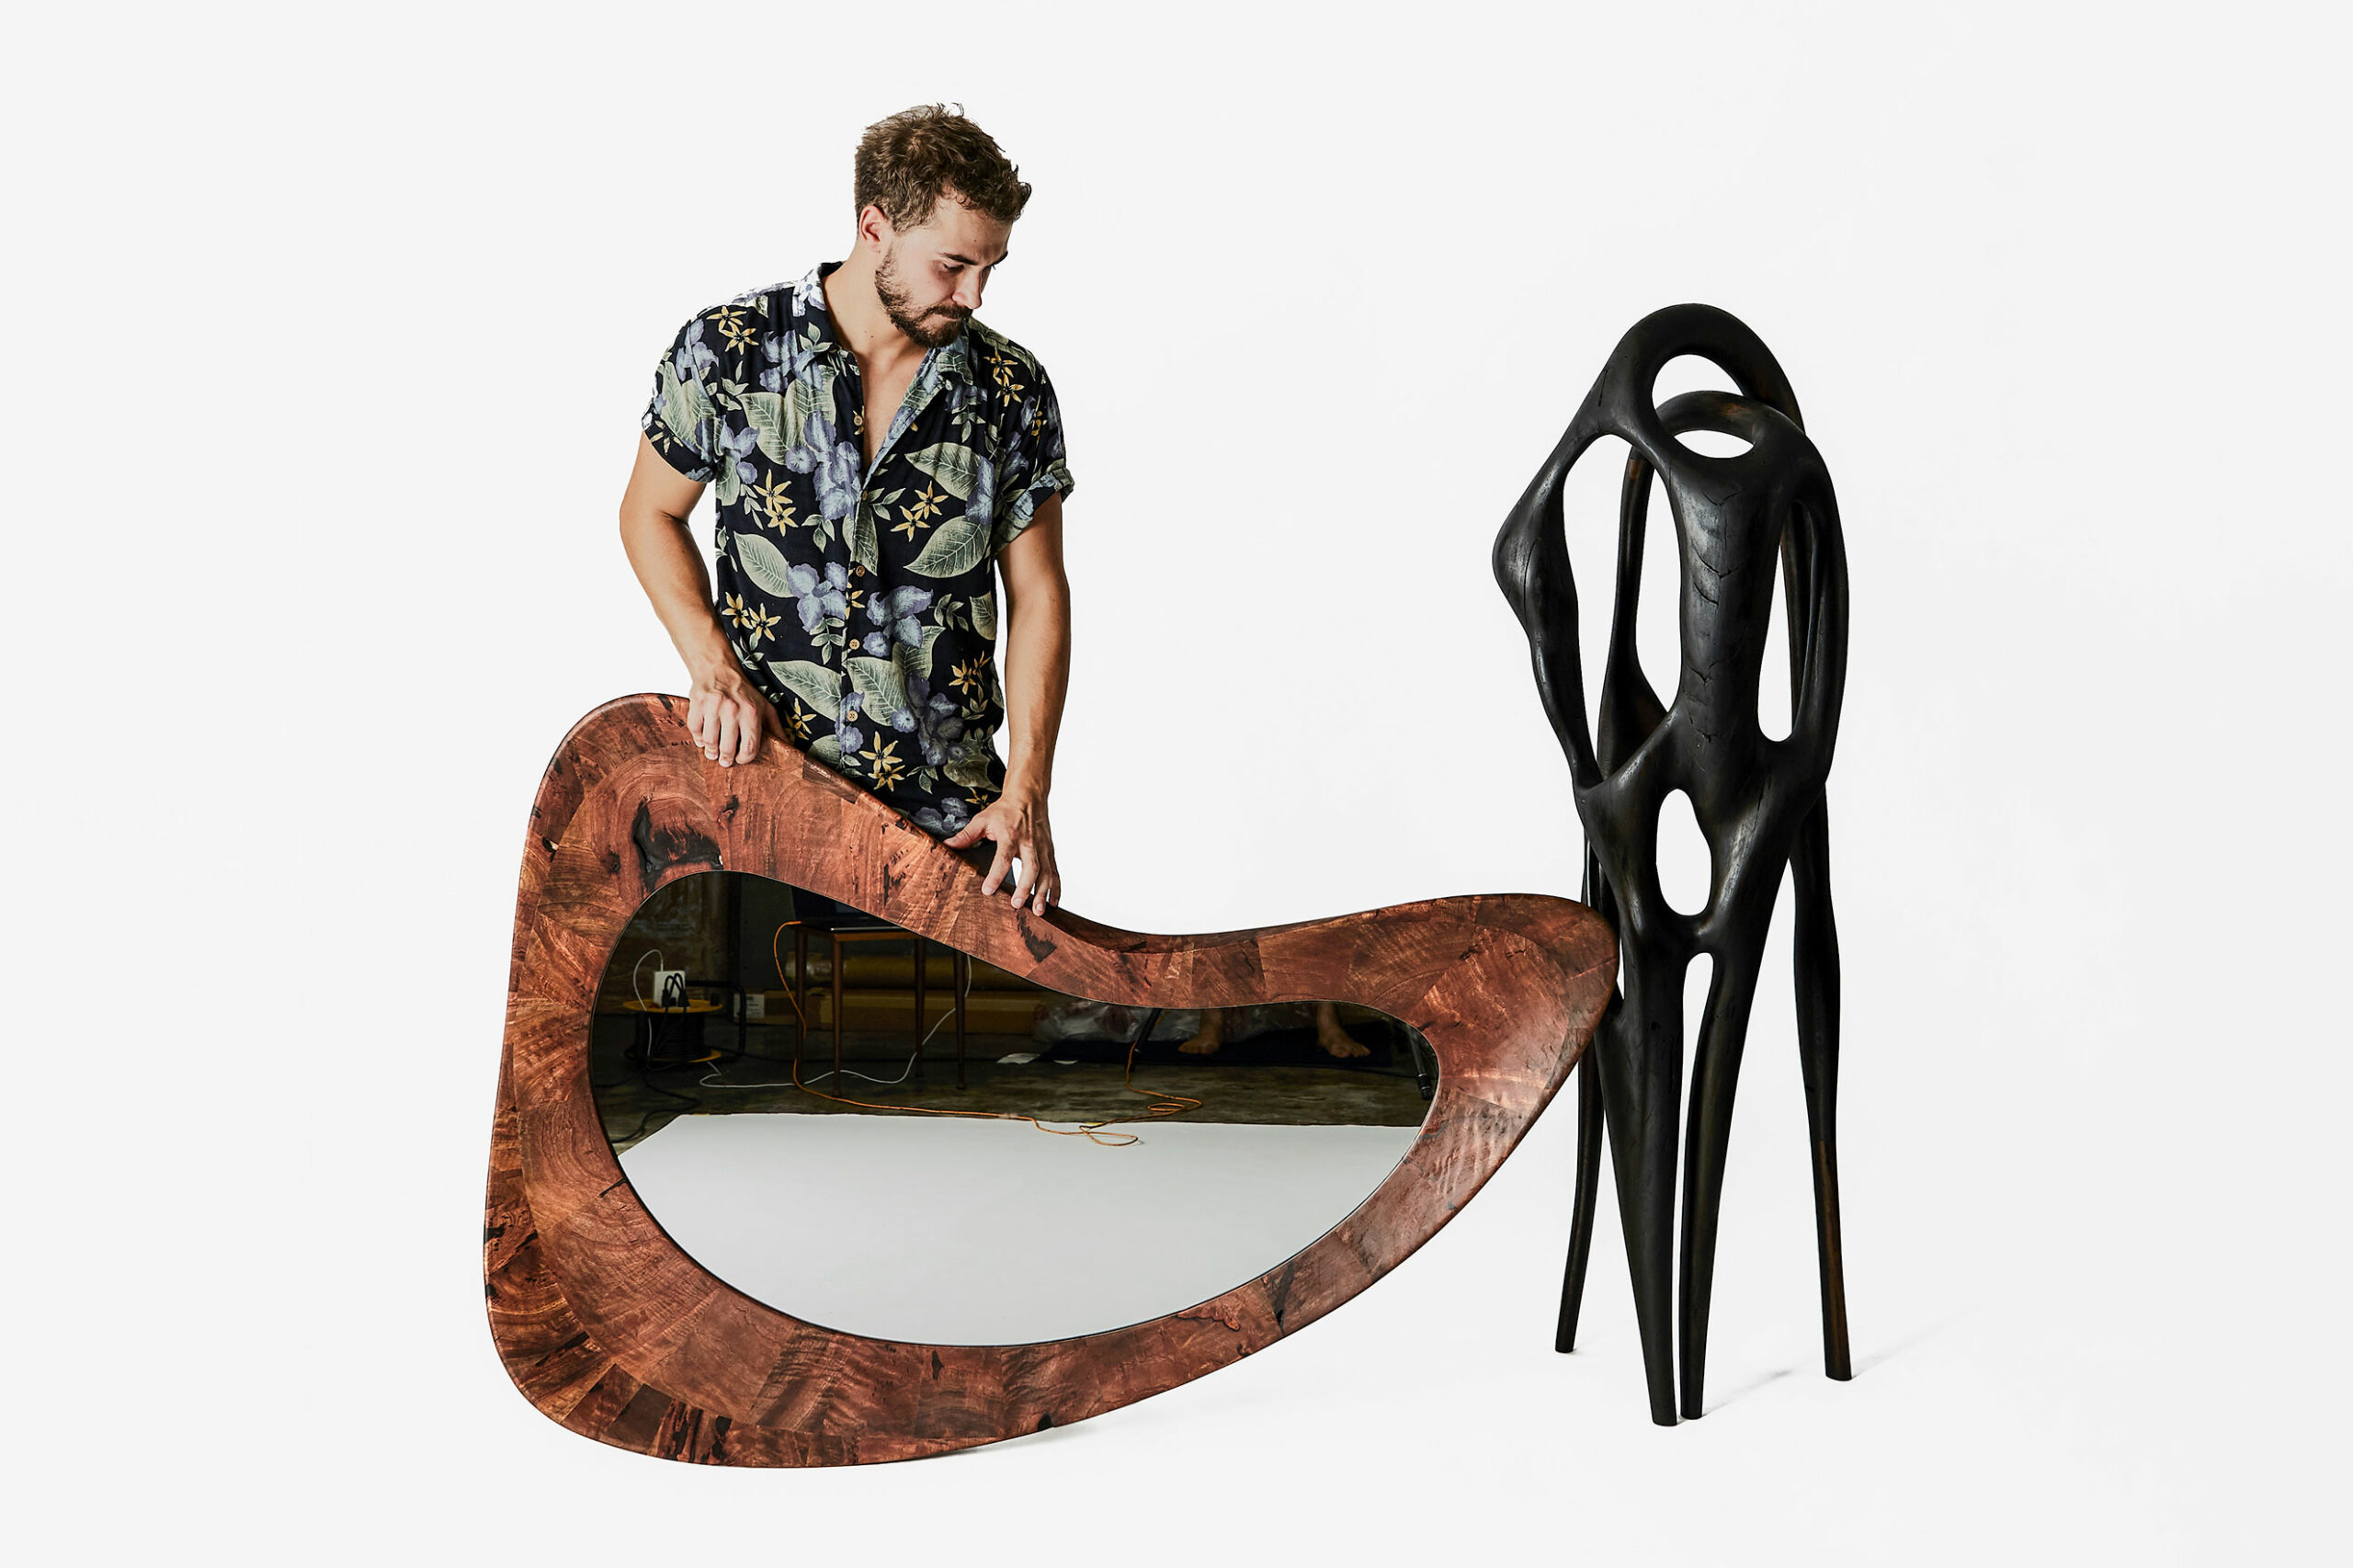 Art - contemporain - galerie d'art - bois - exposition - Maxime Goléo - miroir - sculpture - organique - moderne 